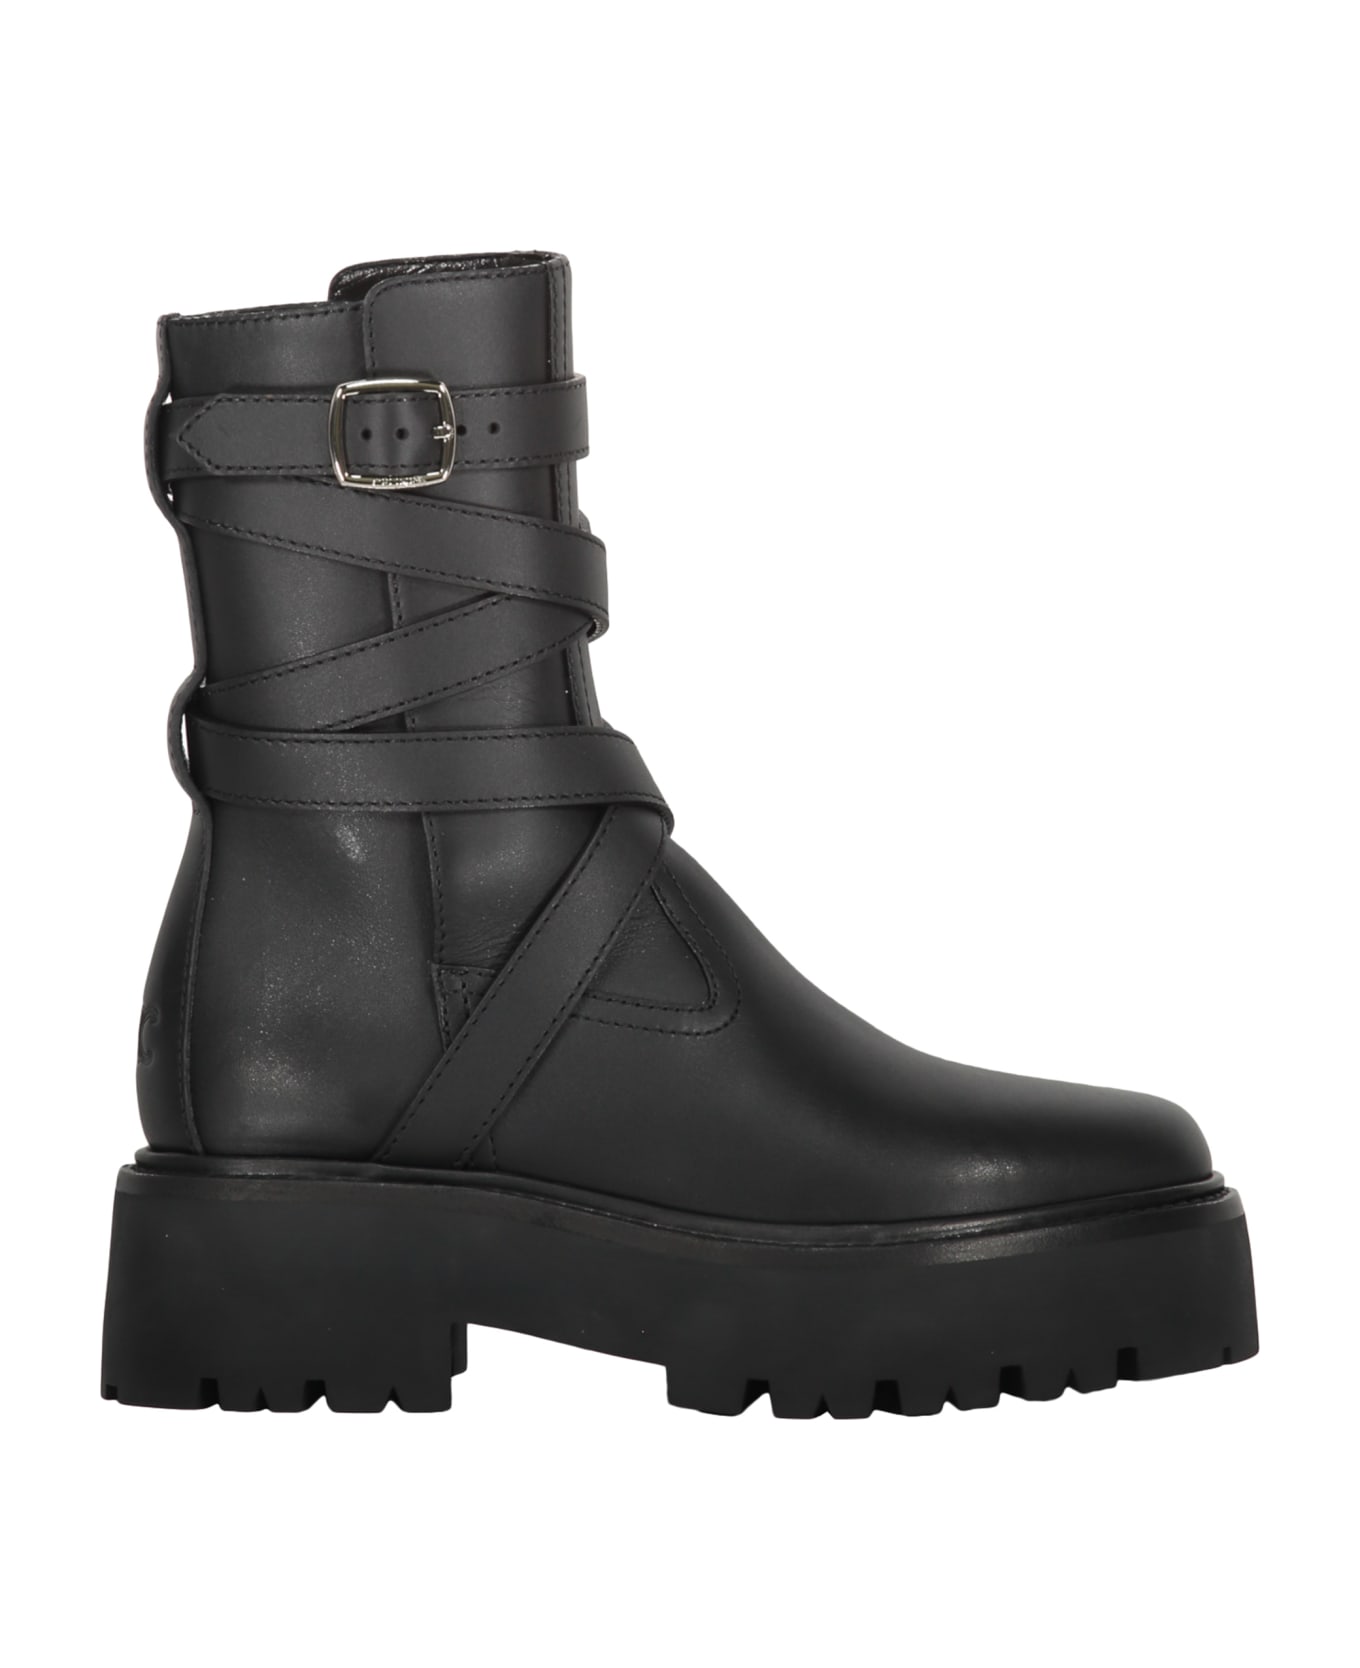 Celine Leather Ankle Boots - black